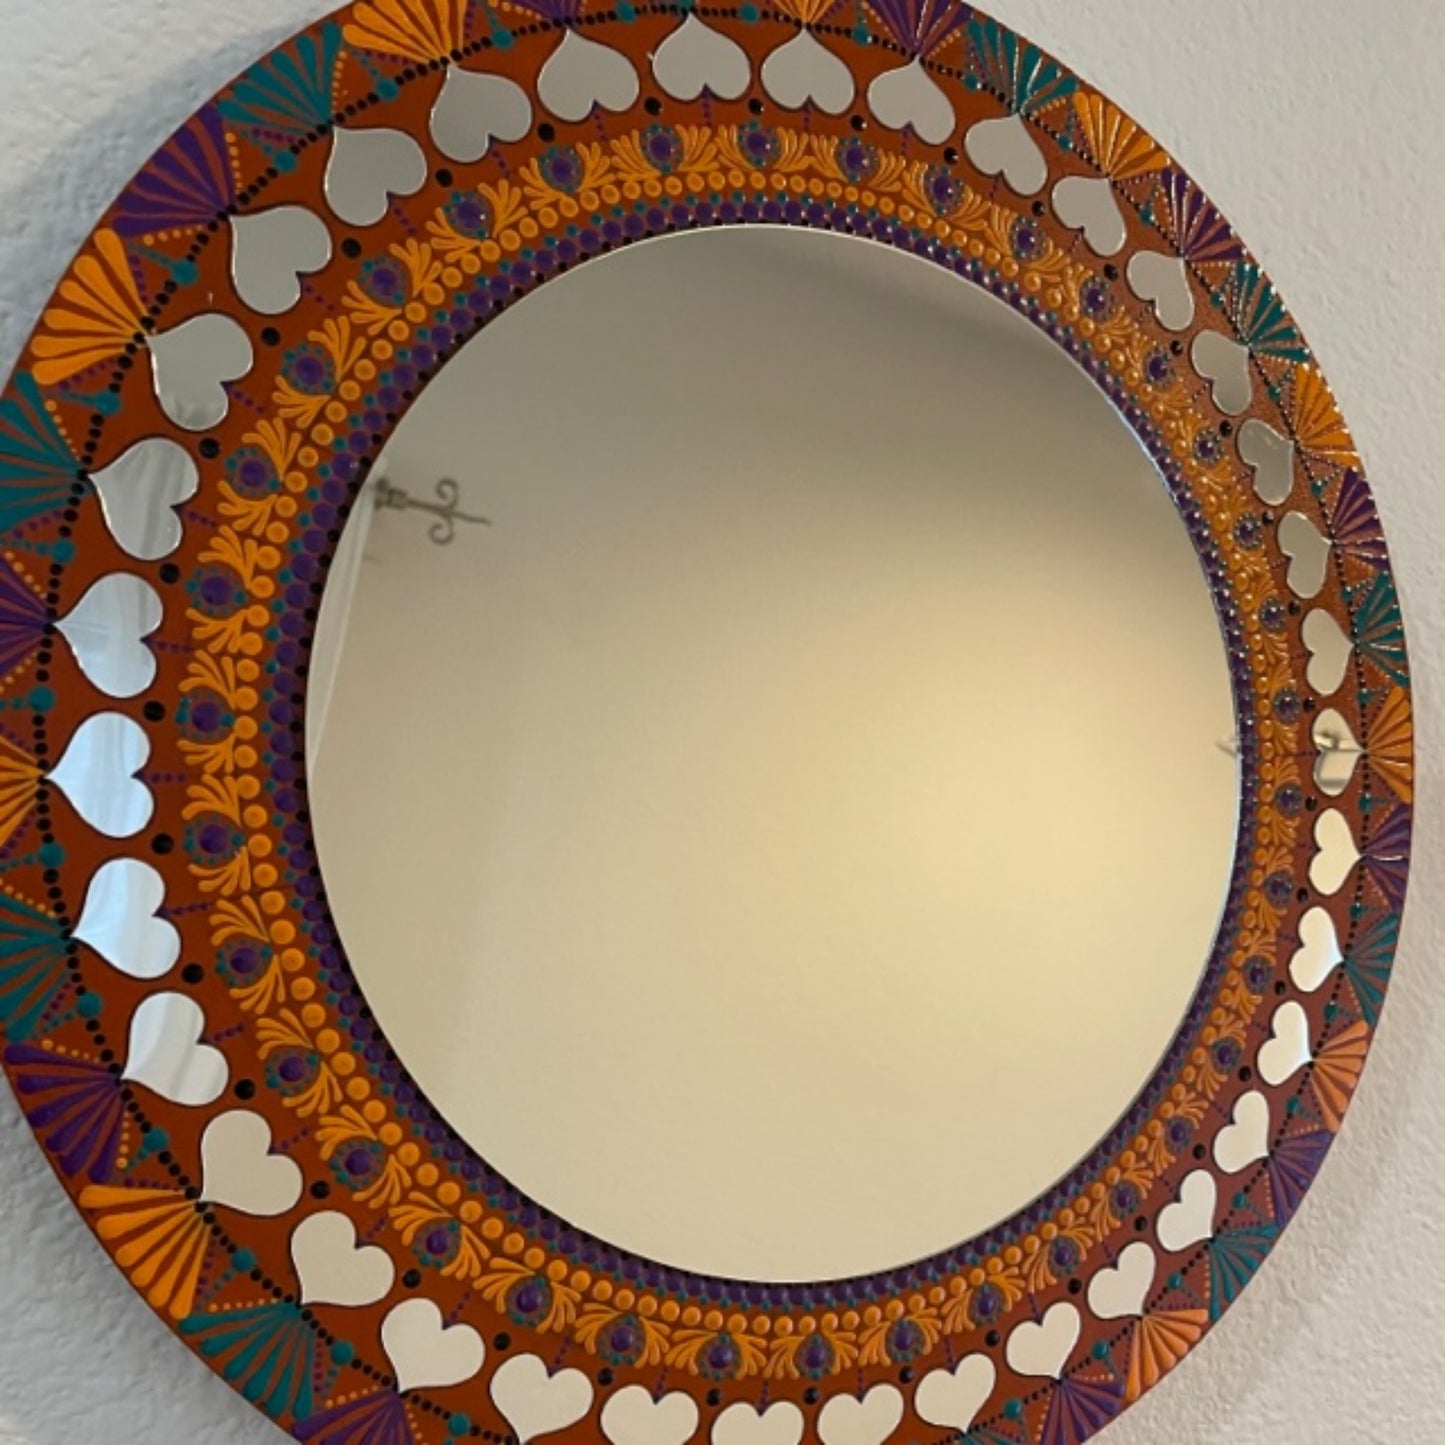 Wall Mirror with Vibrant Colors Dot Art Handmade Acrylic Painting Wall Art Decor